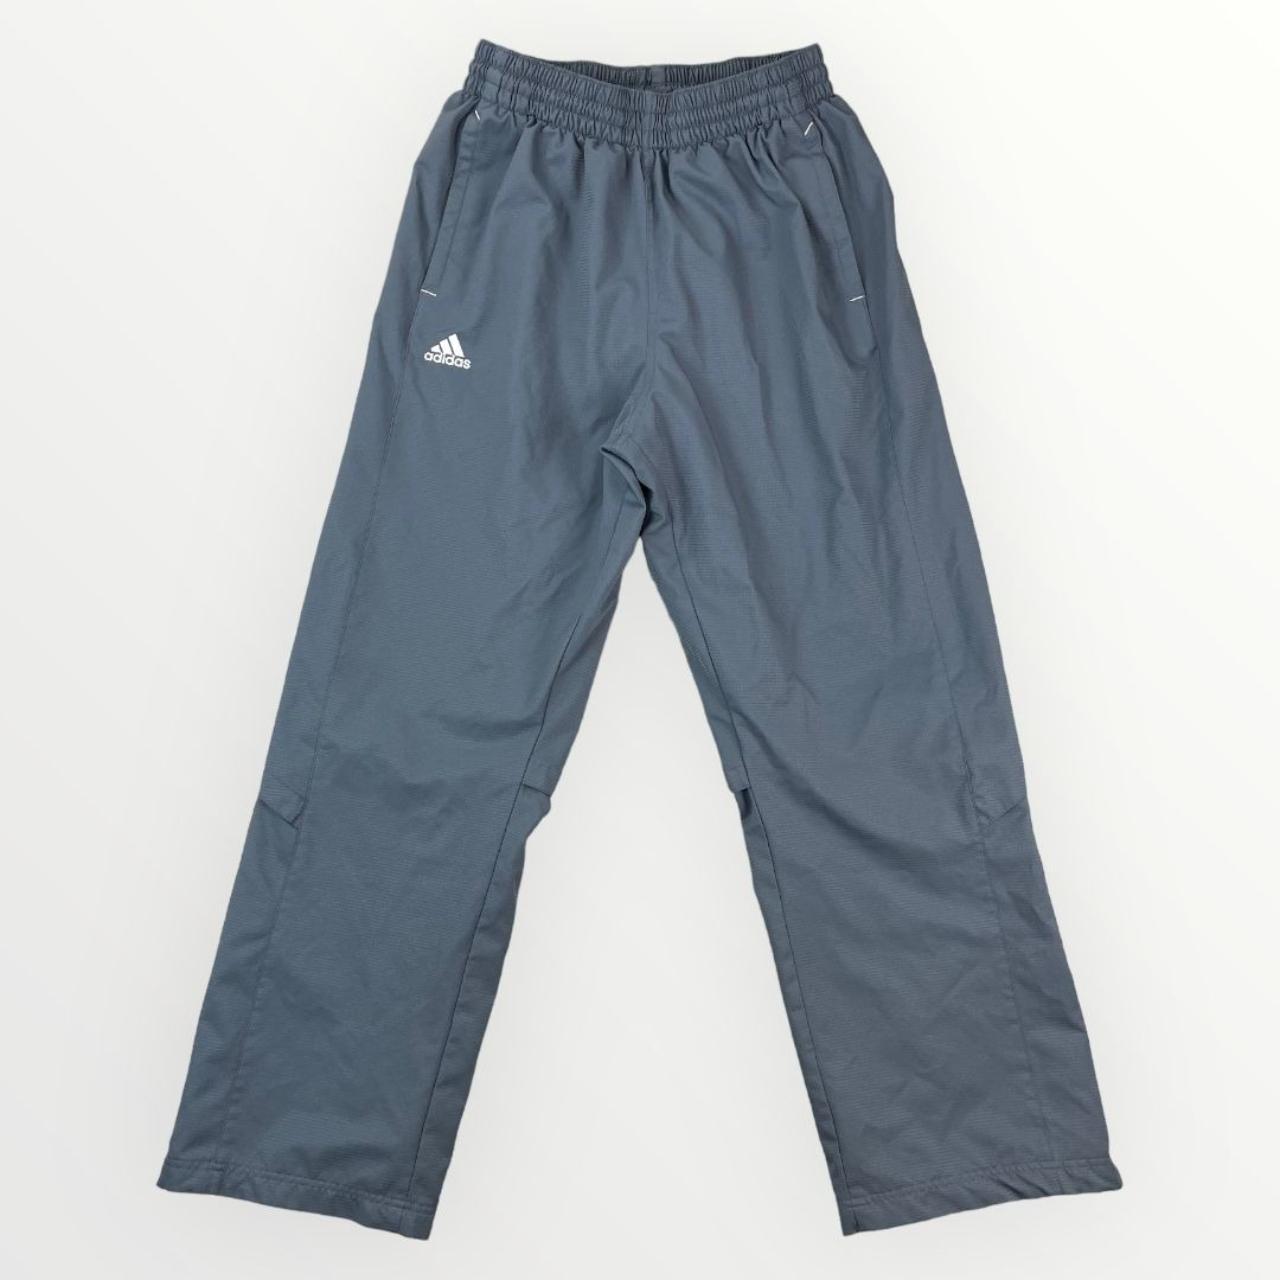 Adidas Vintage 90s Lined Track Windbreaker Pants w Zip Legs  Pocket   thefuzzyfelt